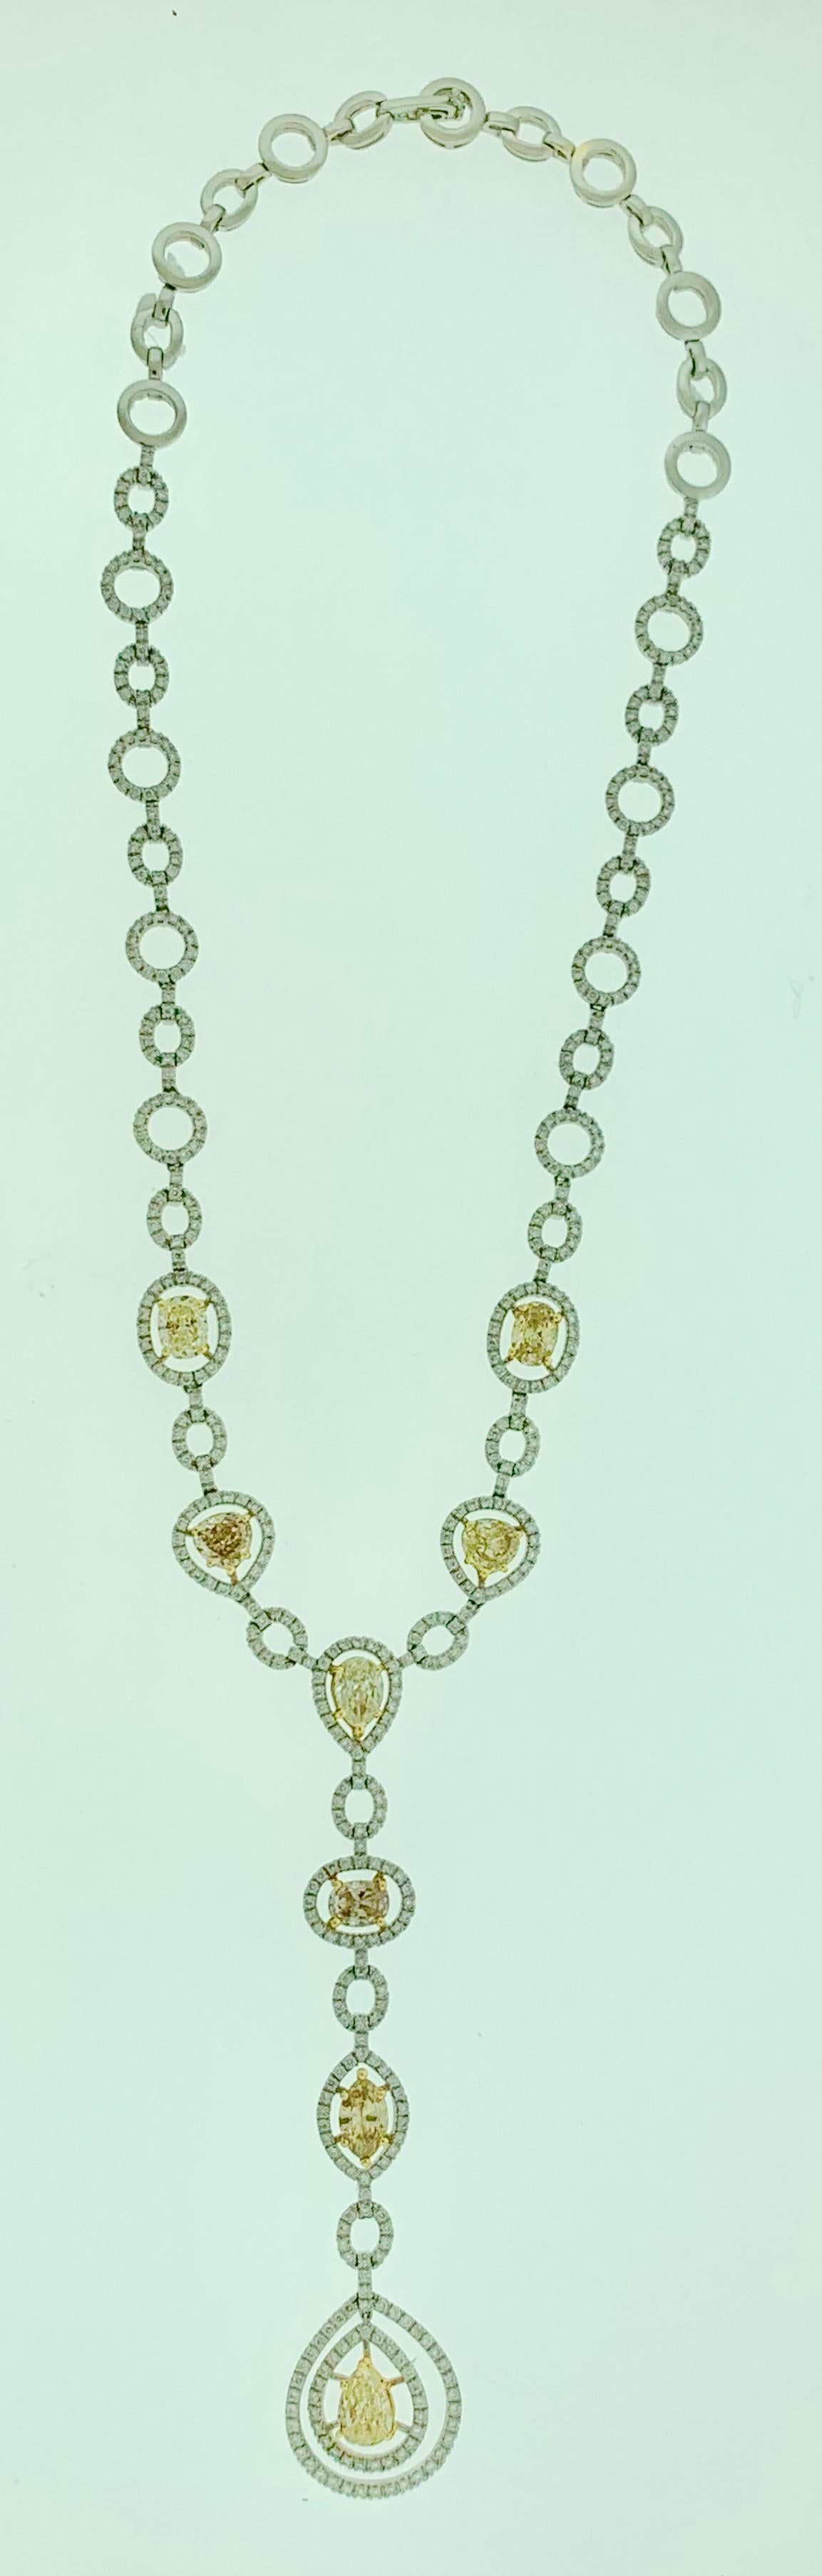 8 Yellow Solitaire Diamond and White Diamond Necklace 18 Karat White Gold For Sale 1